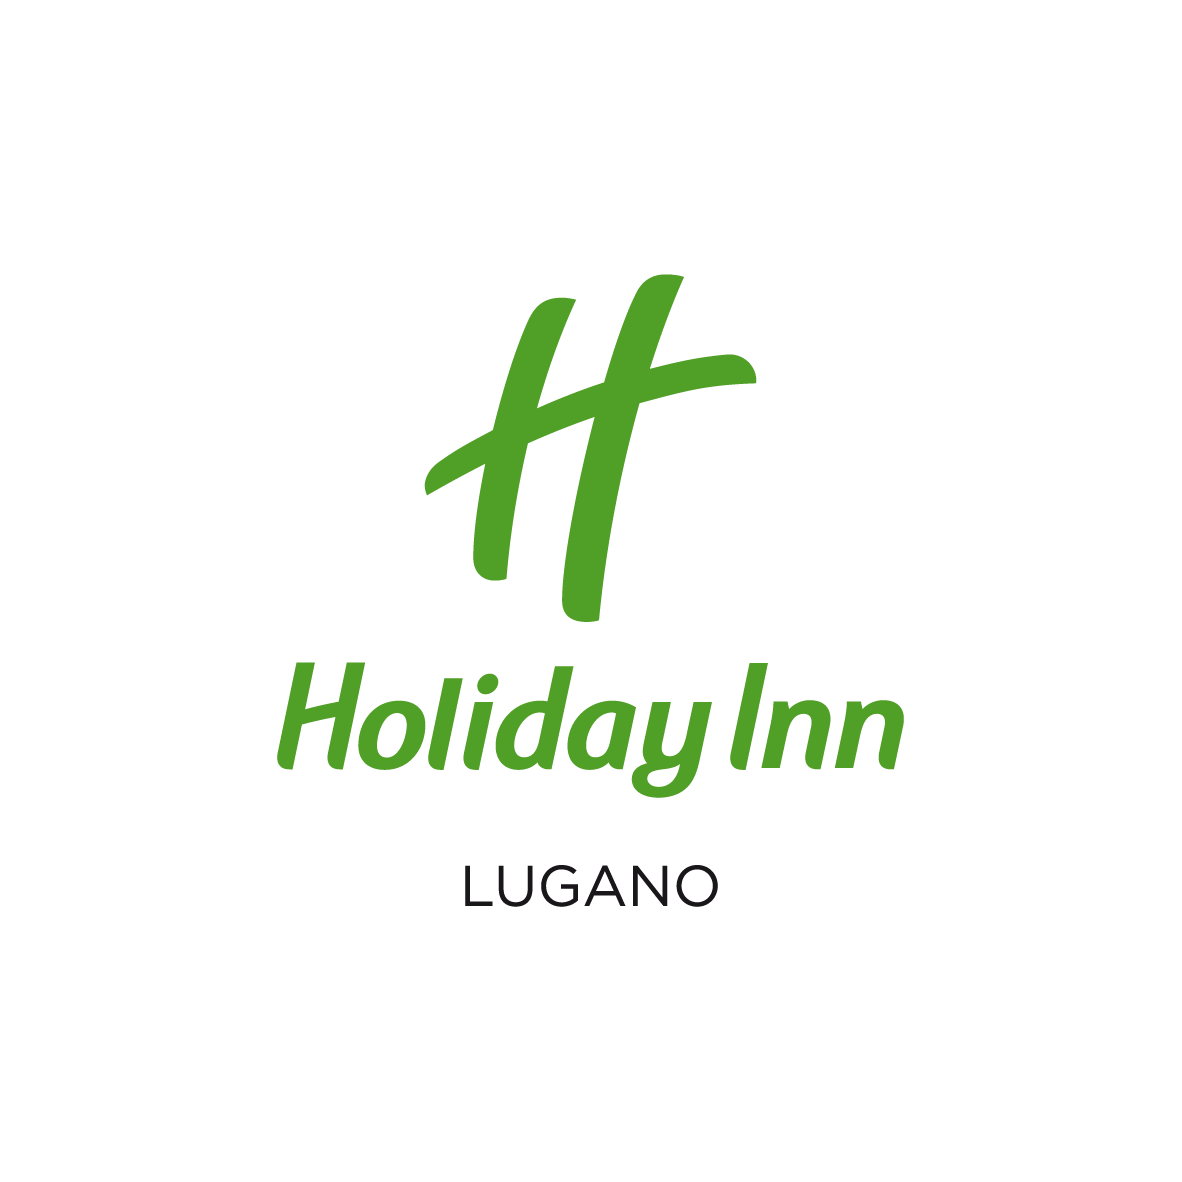 04 - Holiday Inn Lugano_Tavola disegno 1